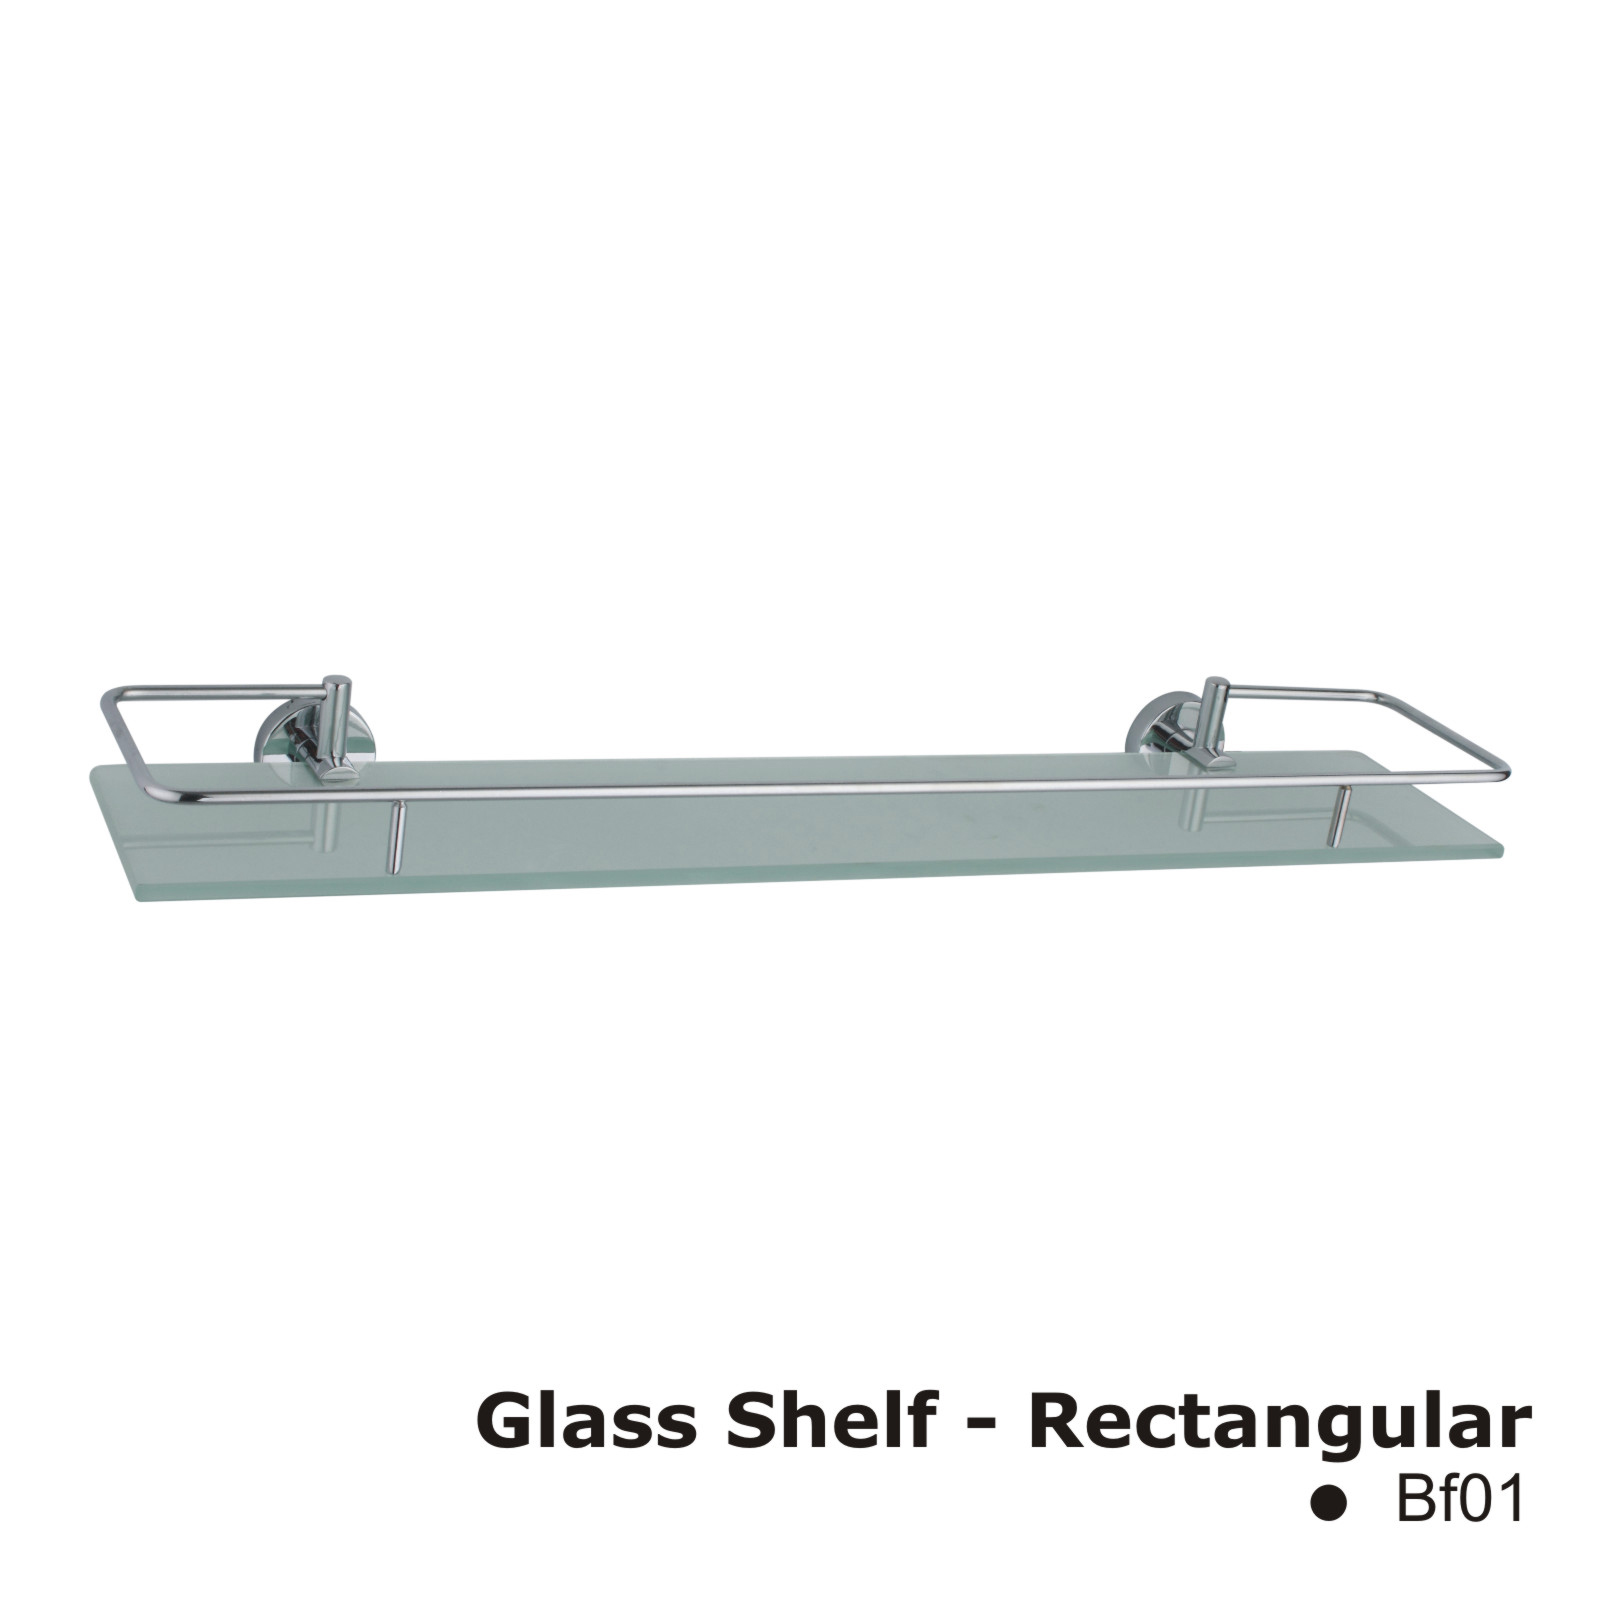 Glass Shelf - Rectangular